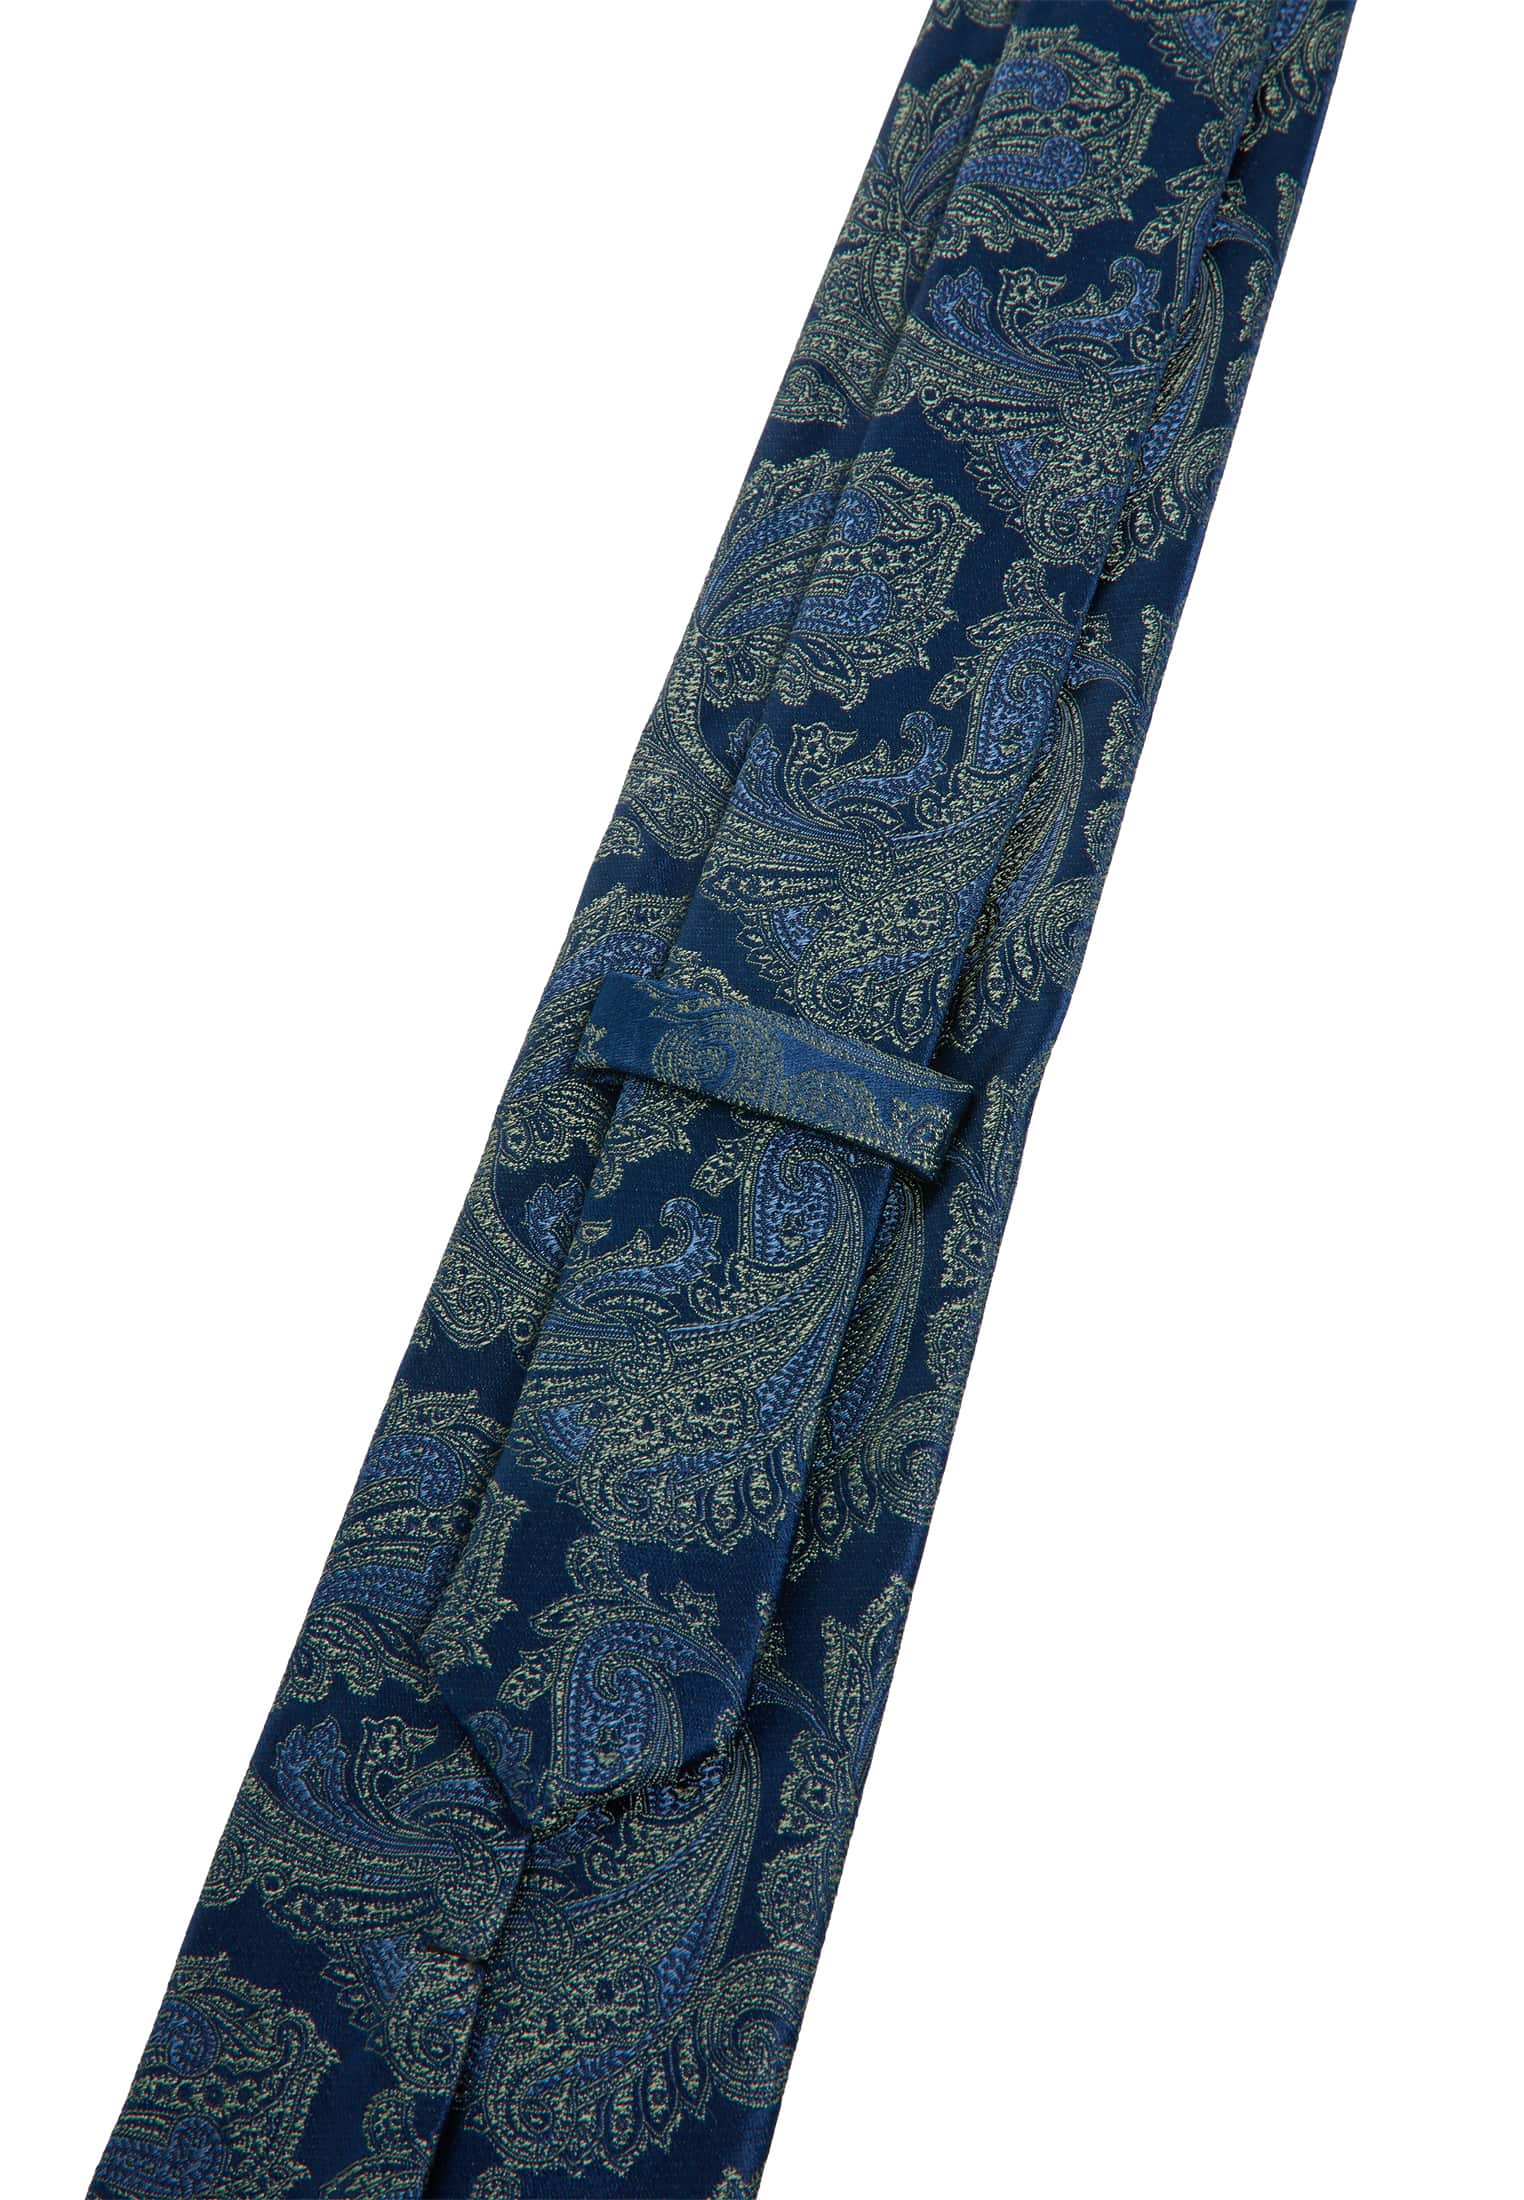 Krawatte in blau/grün gemustert | 142 blau/grün | | 1AC01884-81-48-142